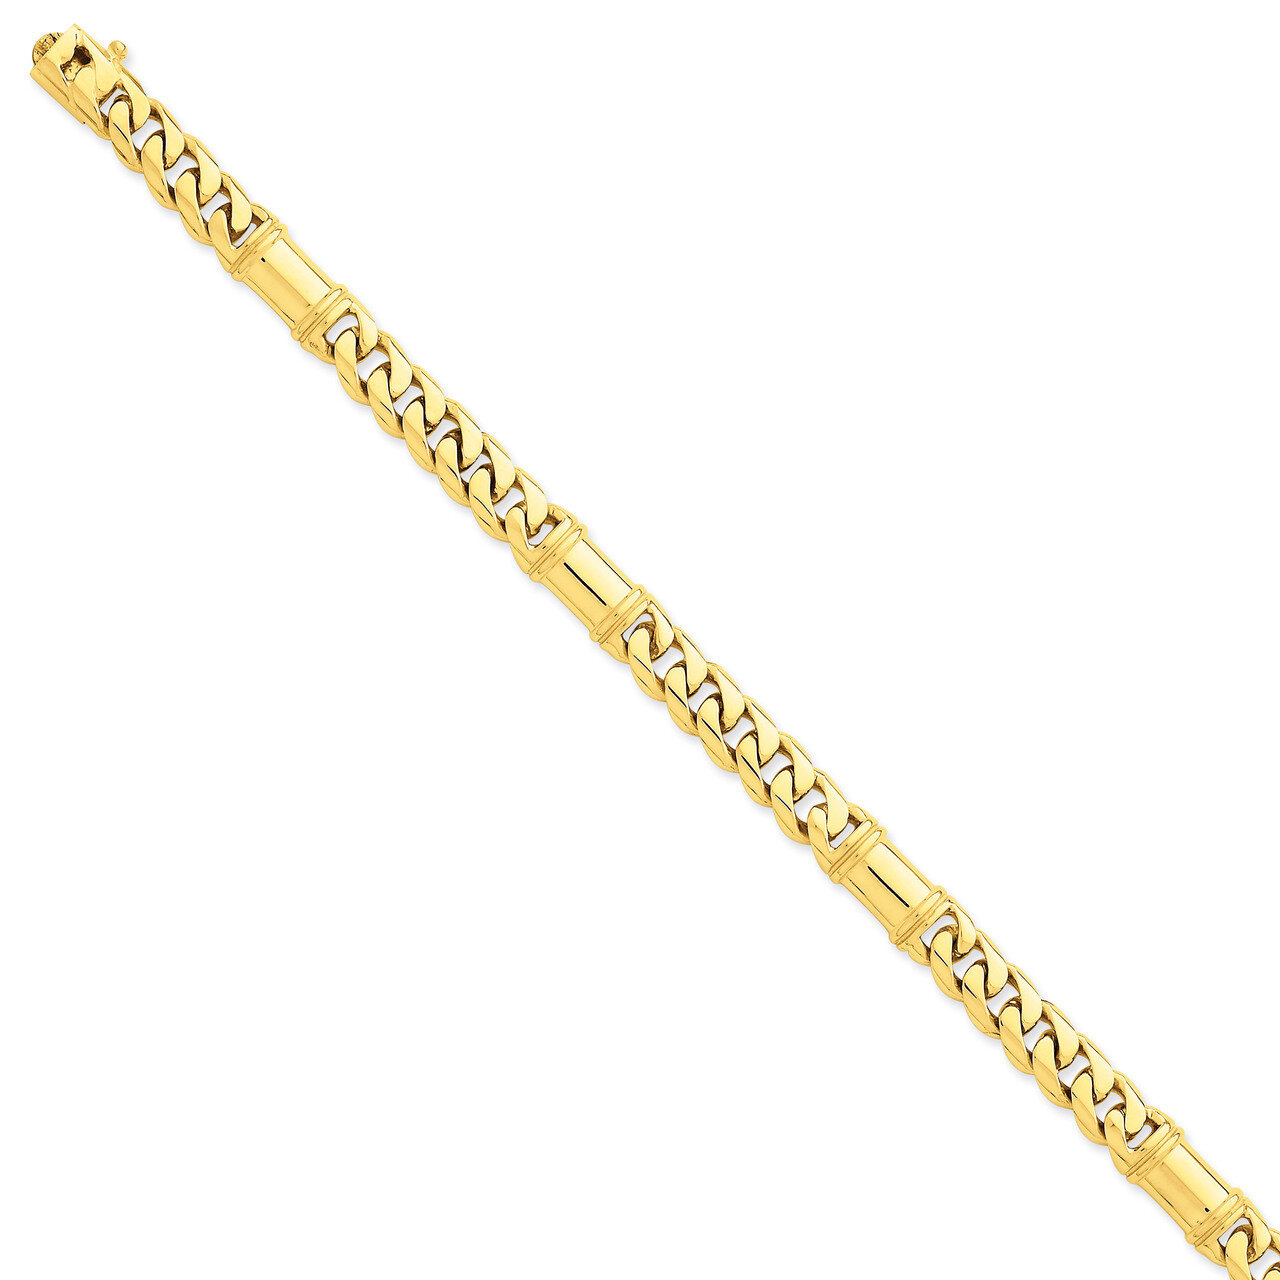 7.5mm Hand-Polished Fancy Link Chain 24 Inch 14k Gold LK187-24